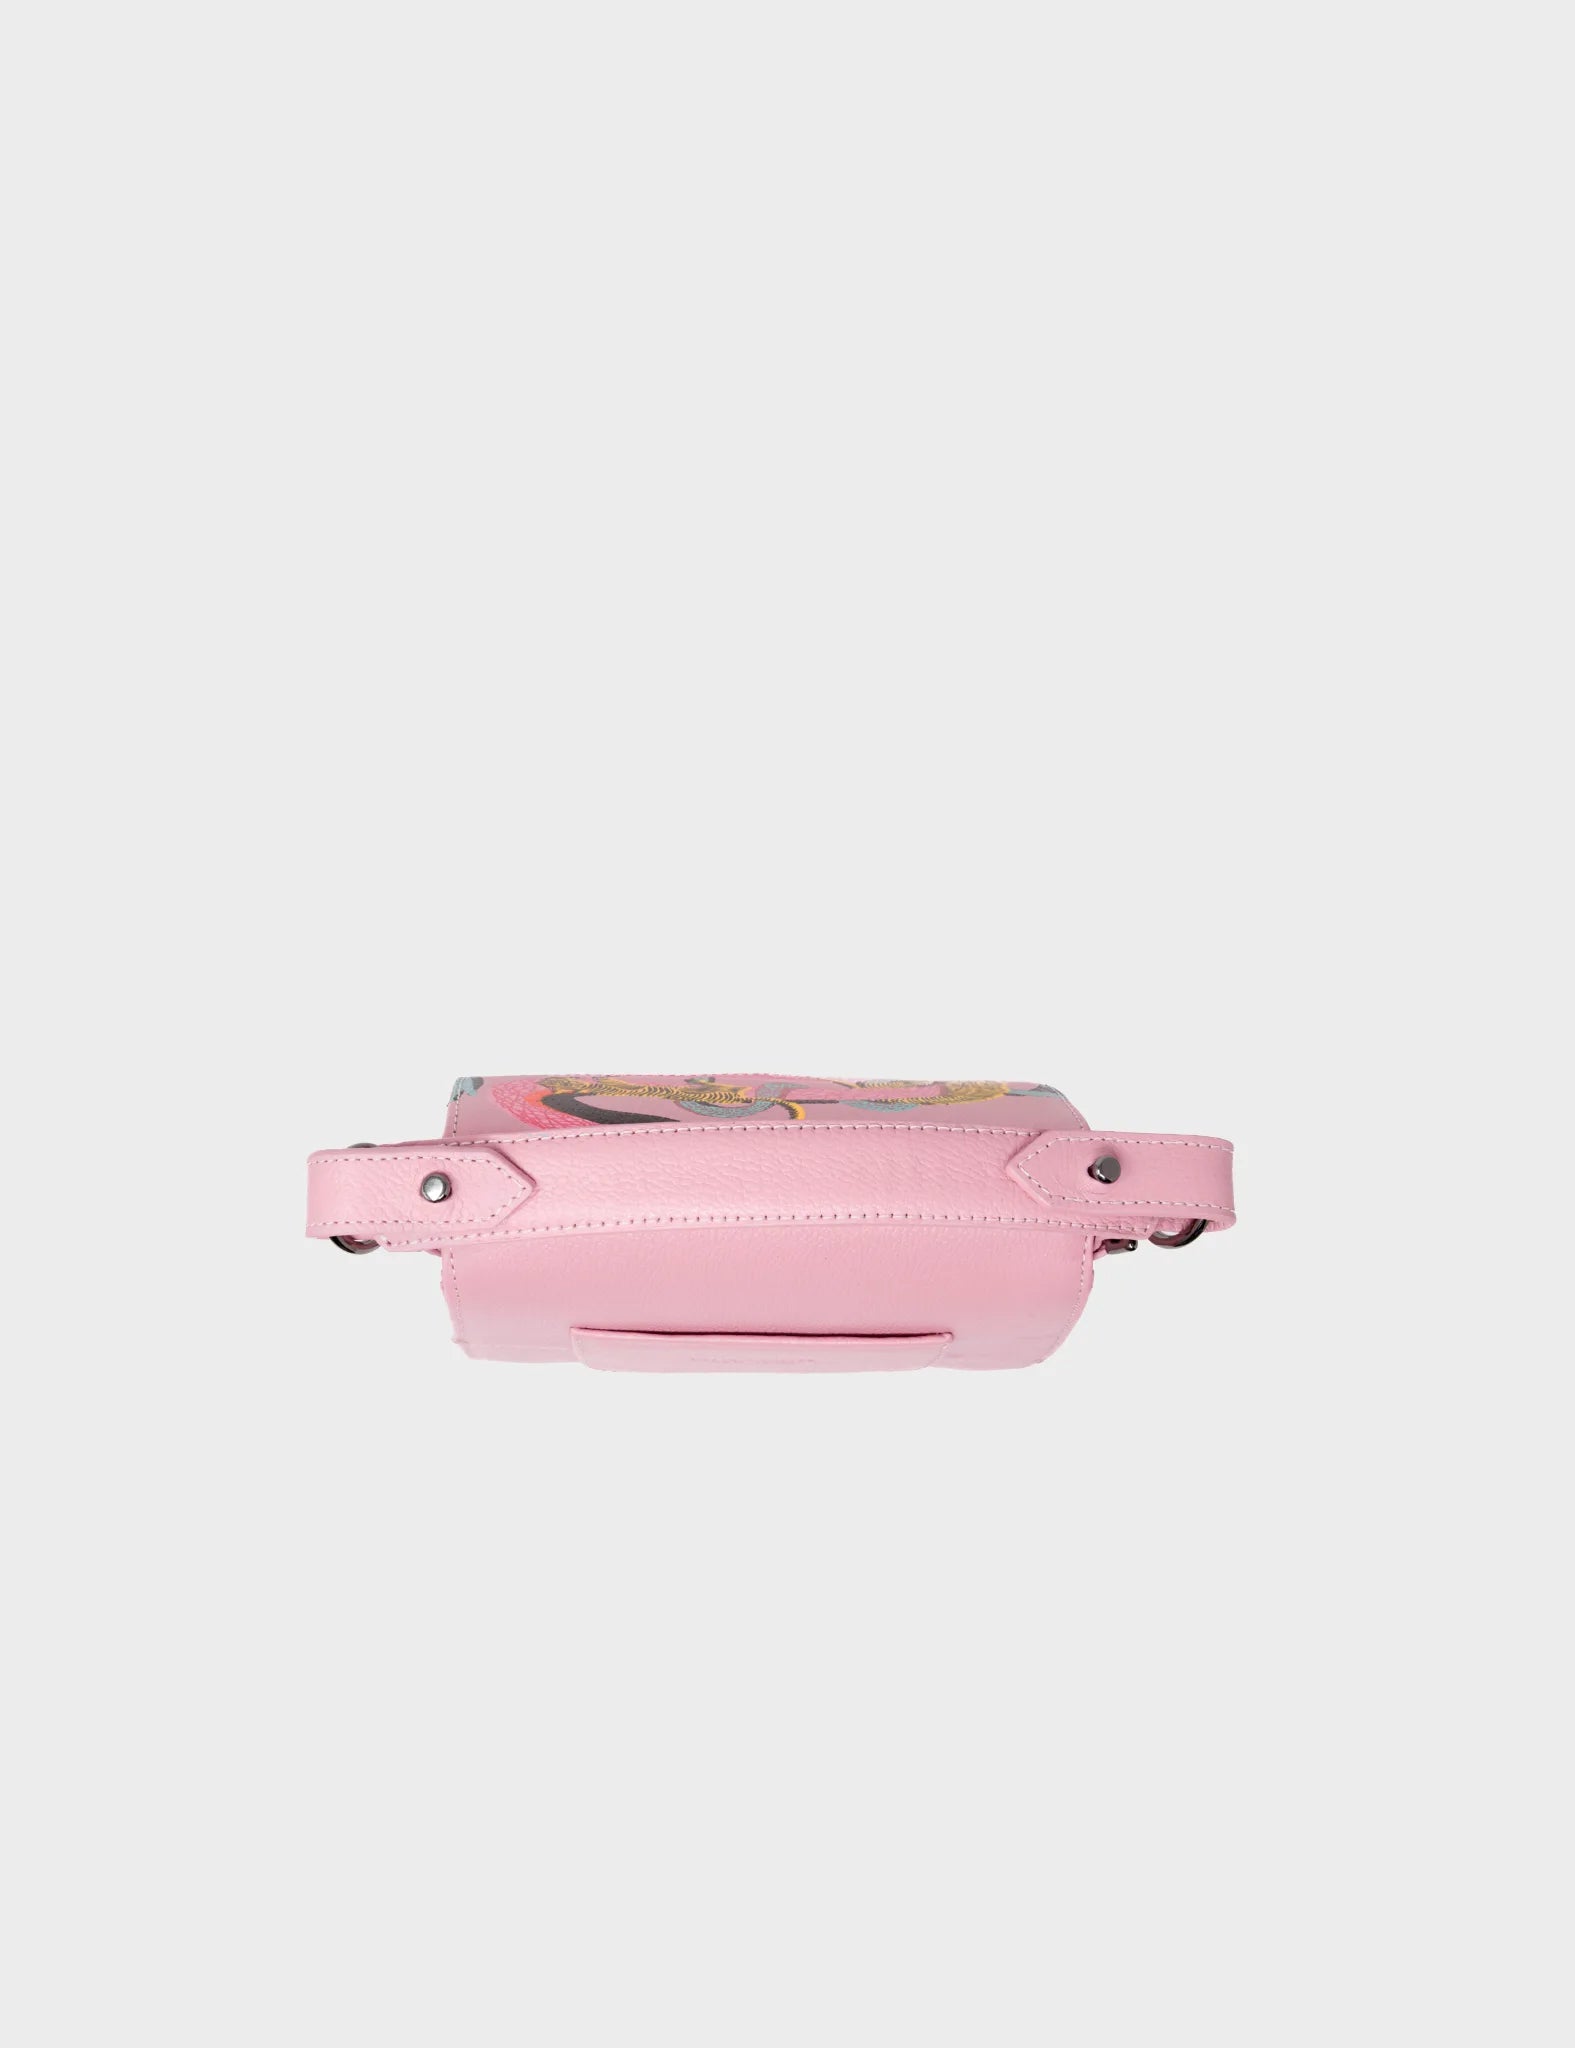 Micro Crossbody Handbag Blush Pink Leather - Tiger and Snake Print - Top